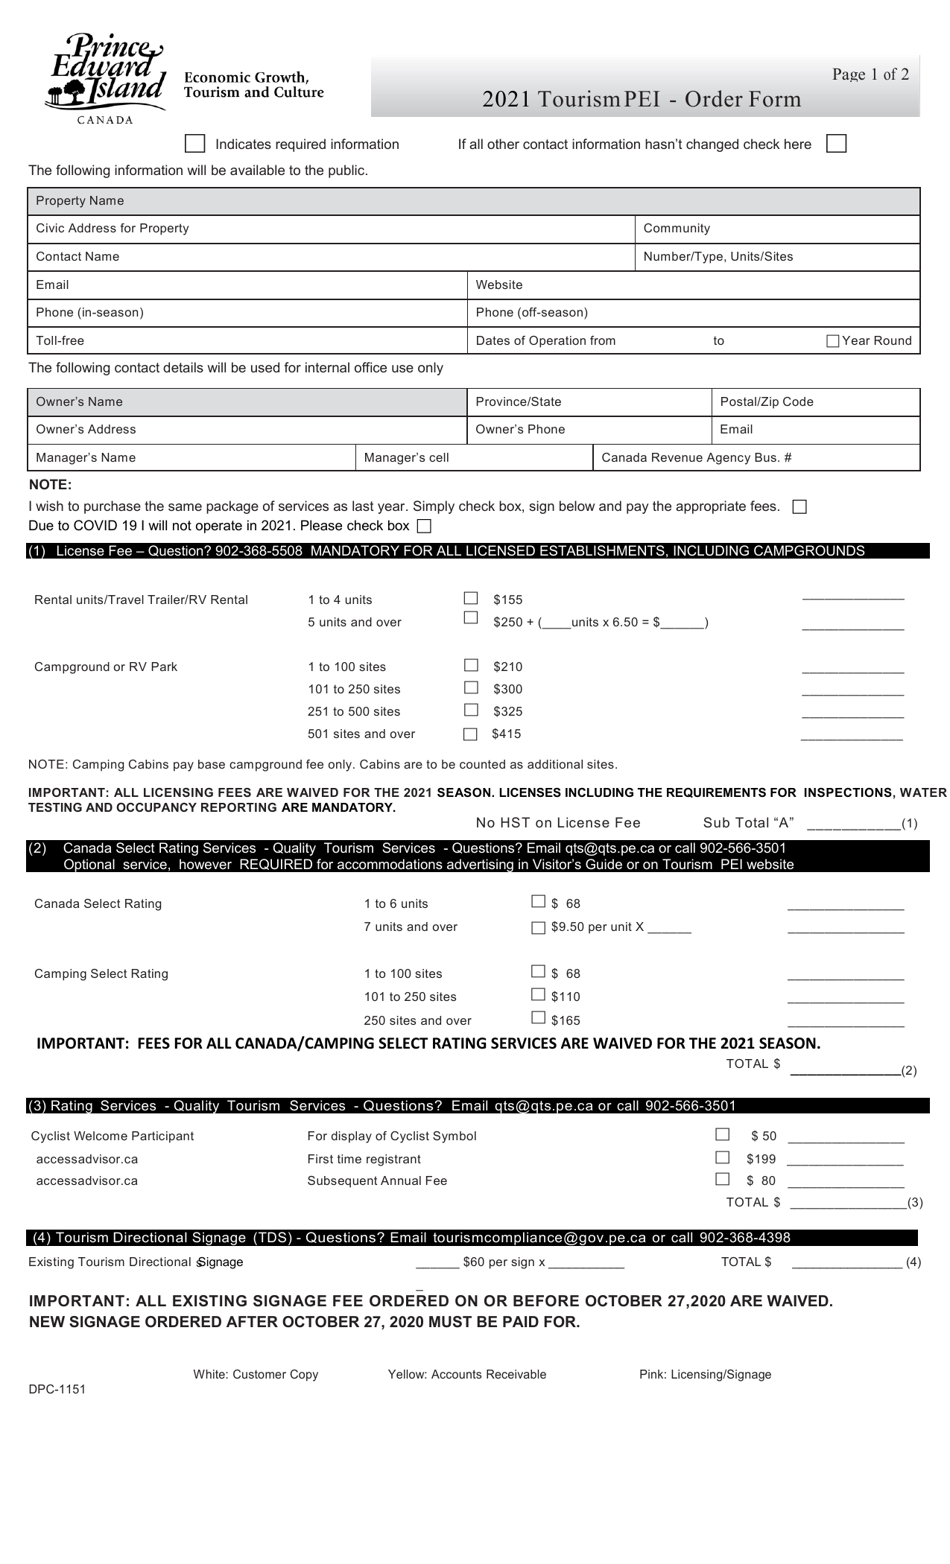 Form DPC-1151 Tourism Pei - Order Form - Prince Edward Island, Canada, Page 1